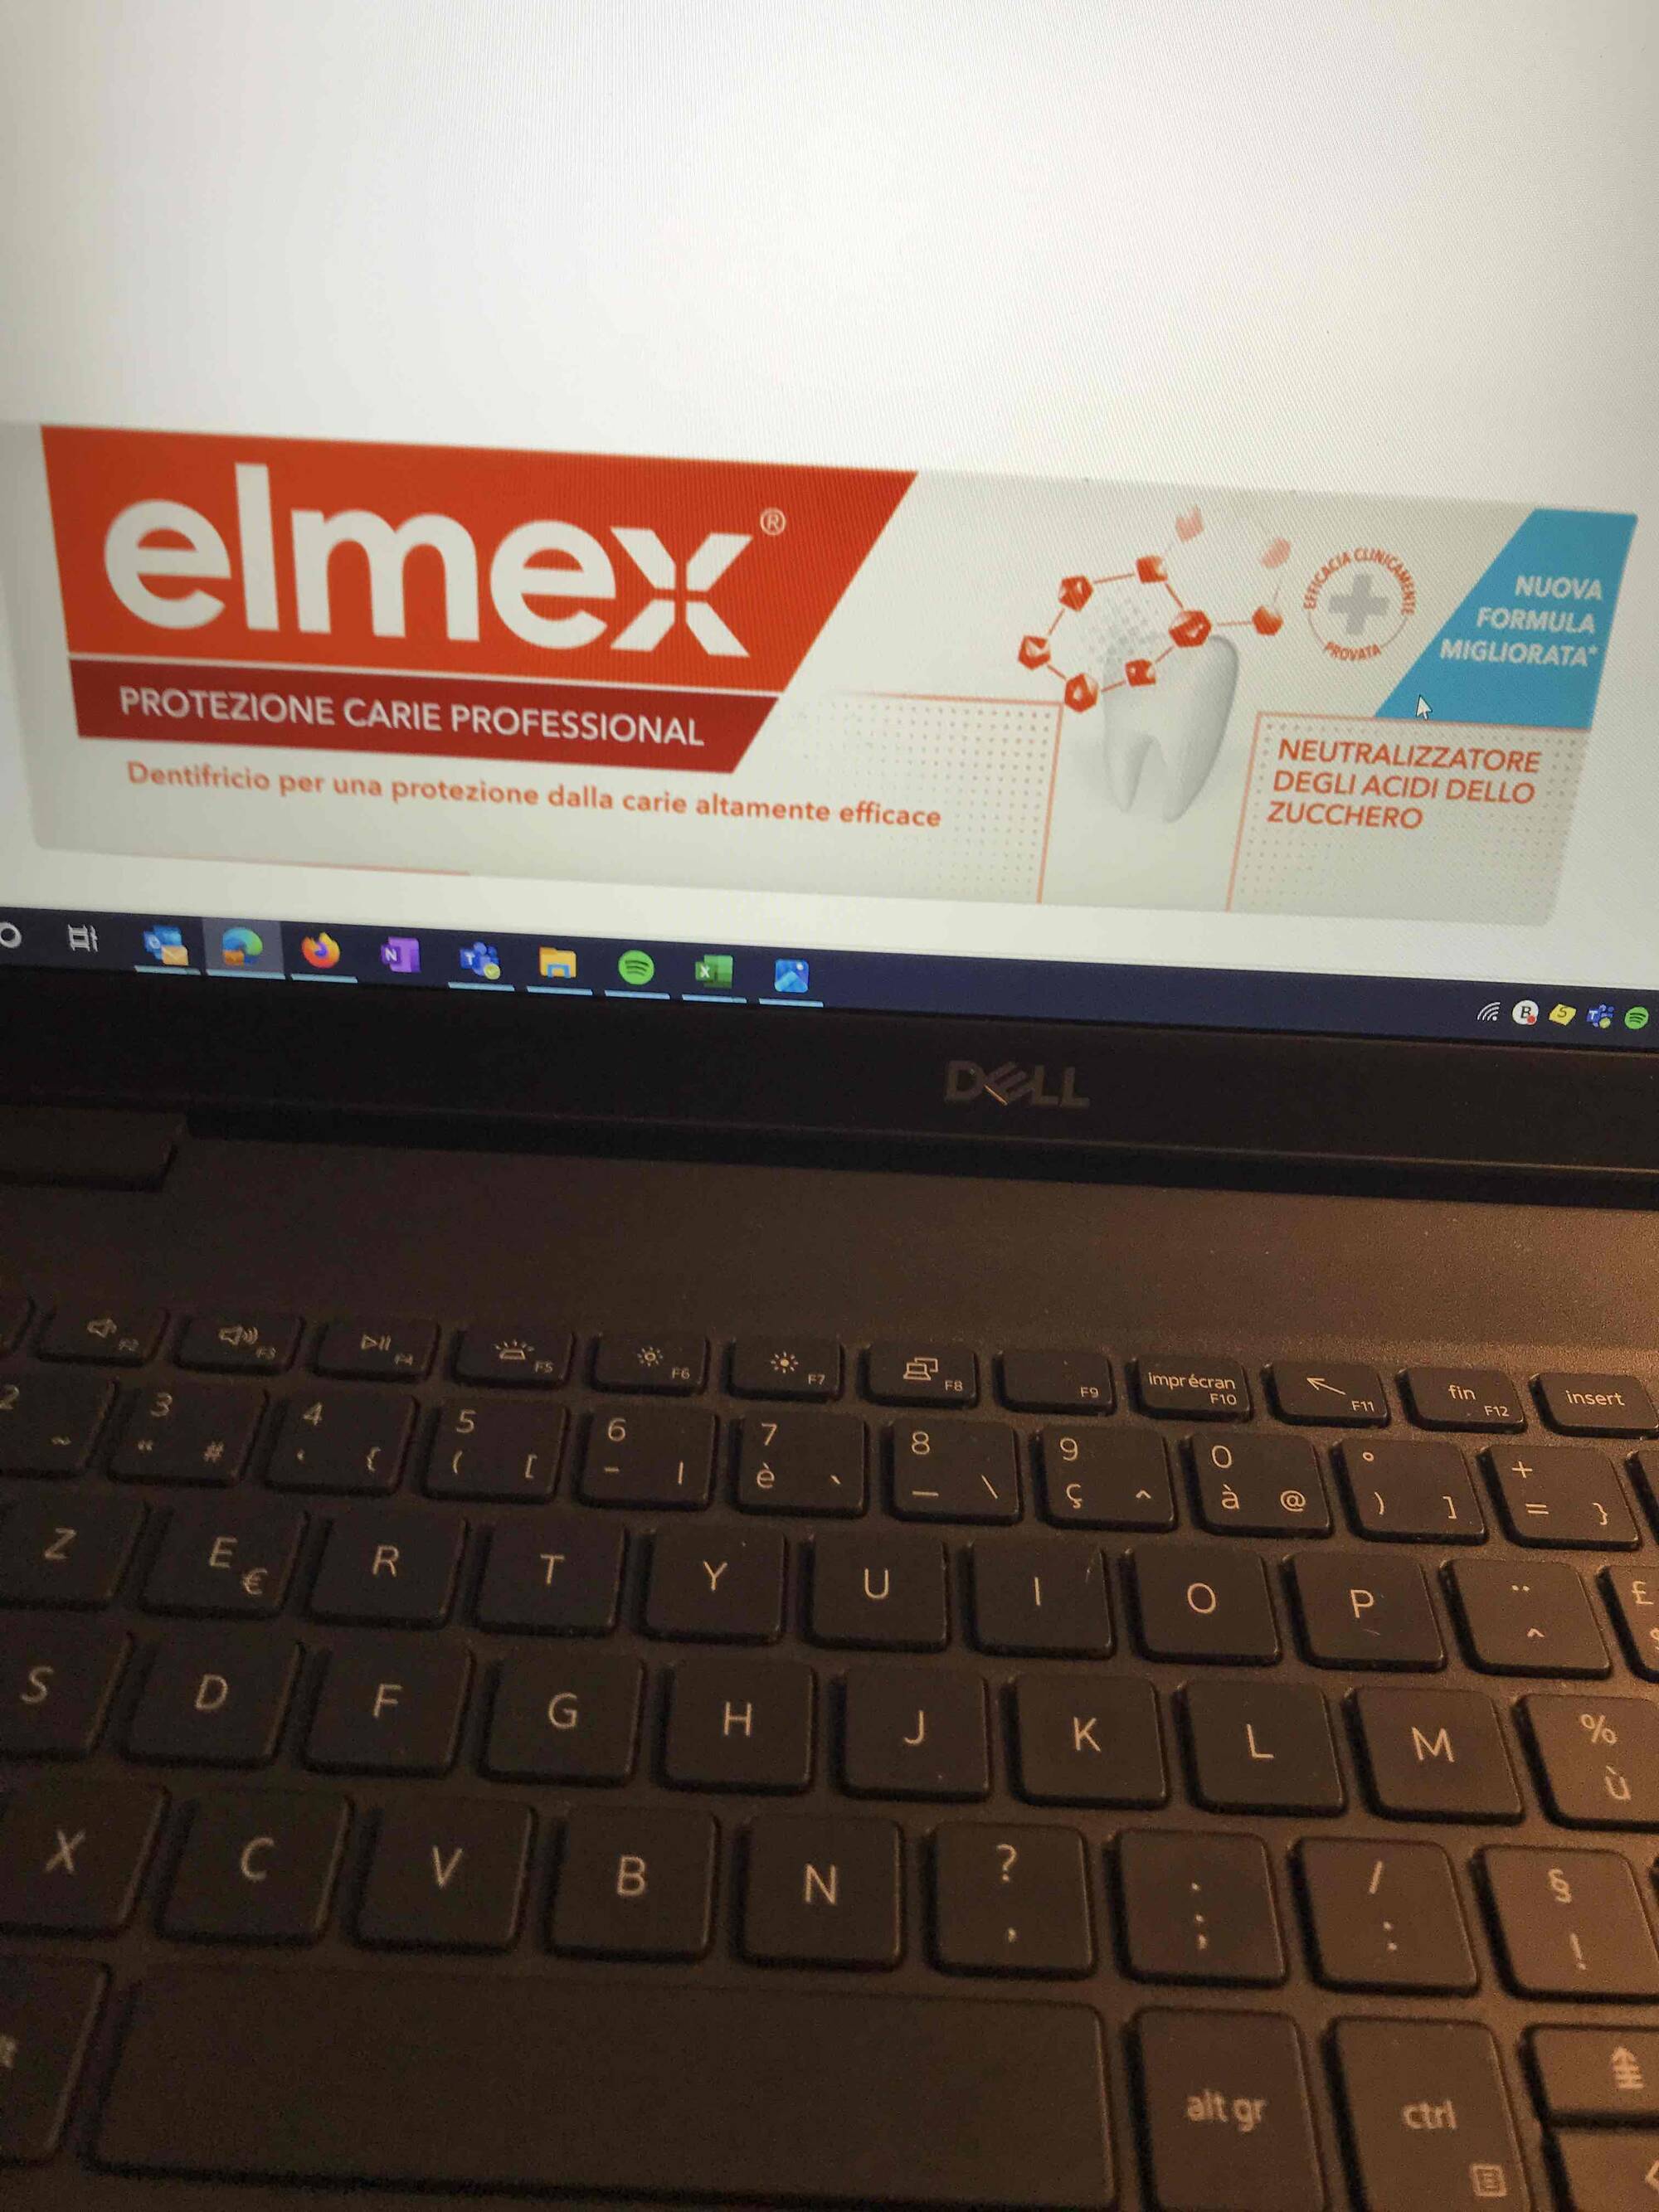 ELMEX - Protezione carie professional